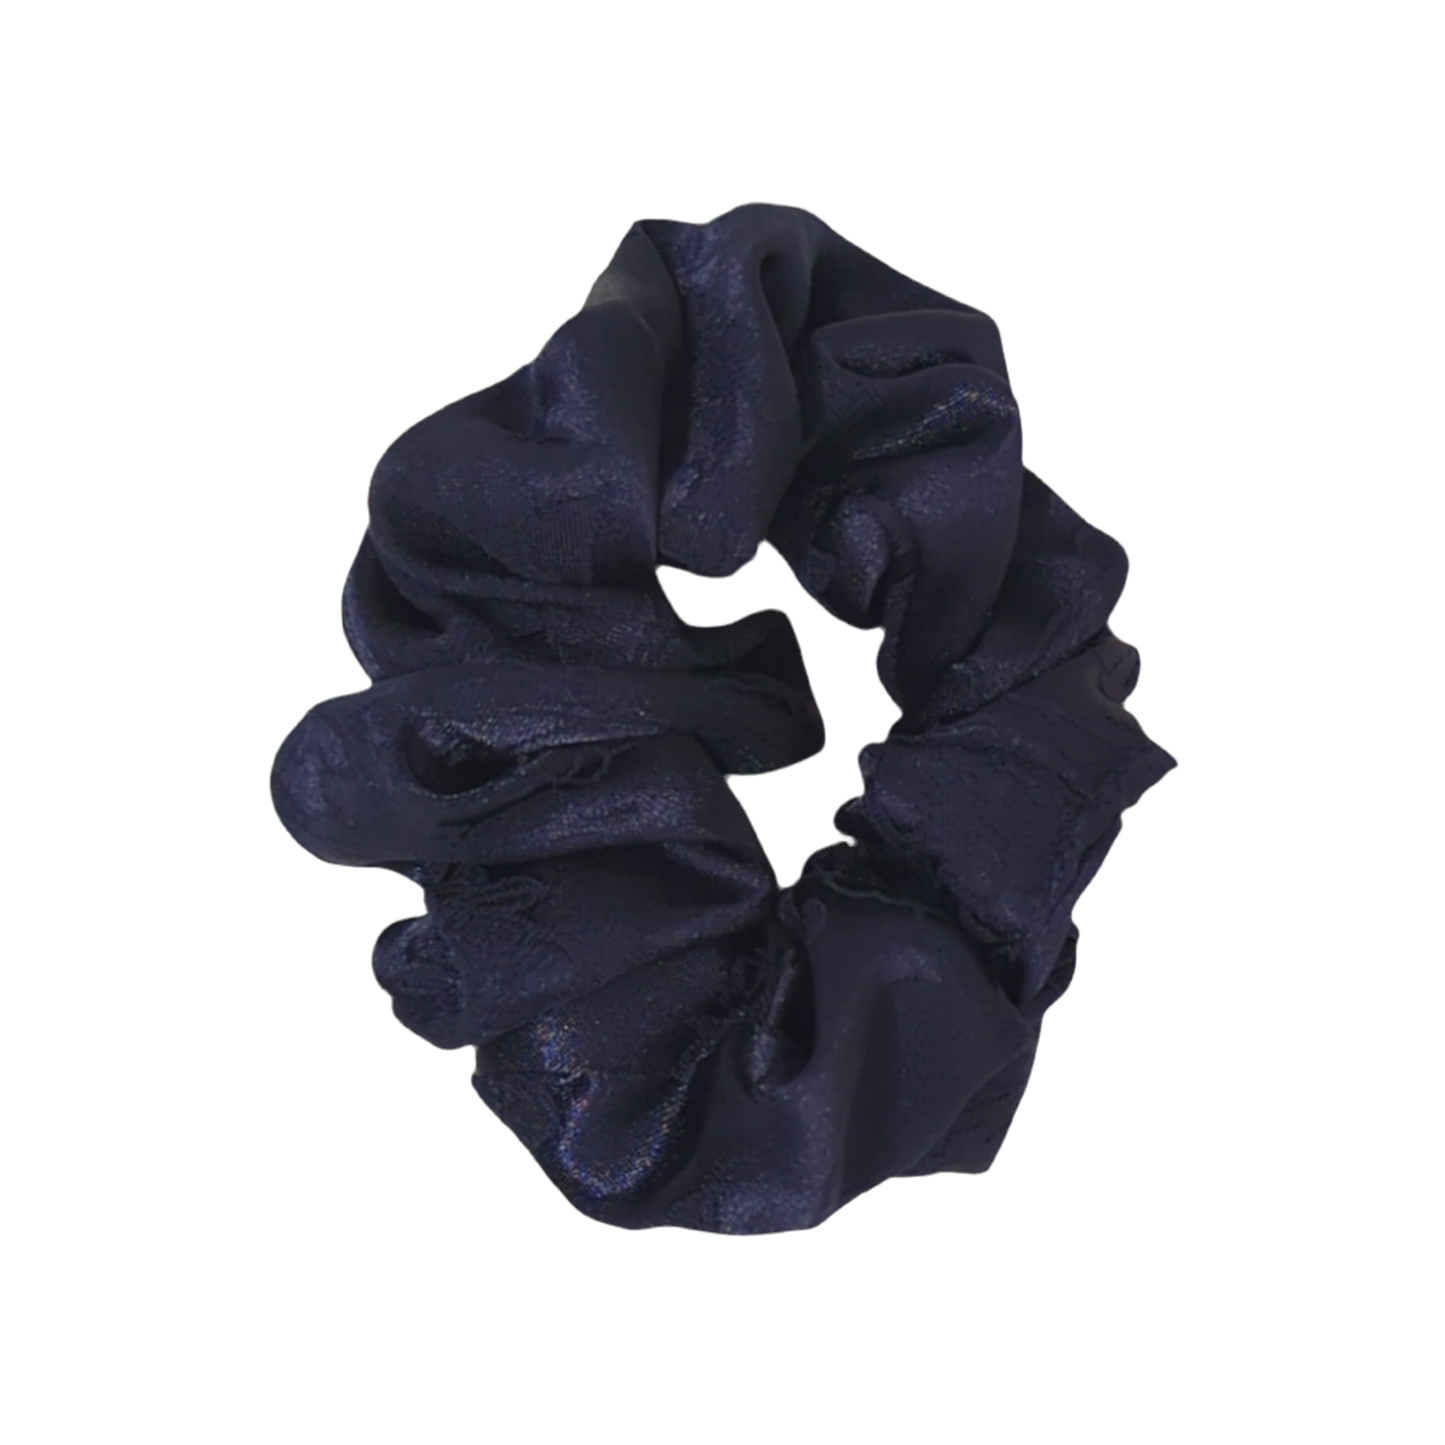 Navy Blue Lace Scrunchie